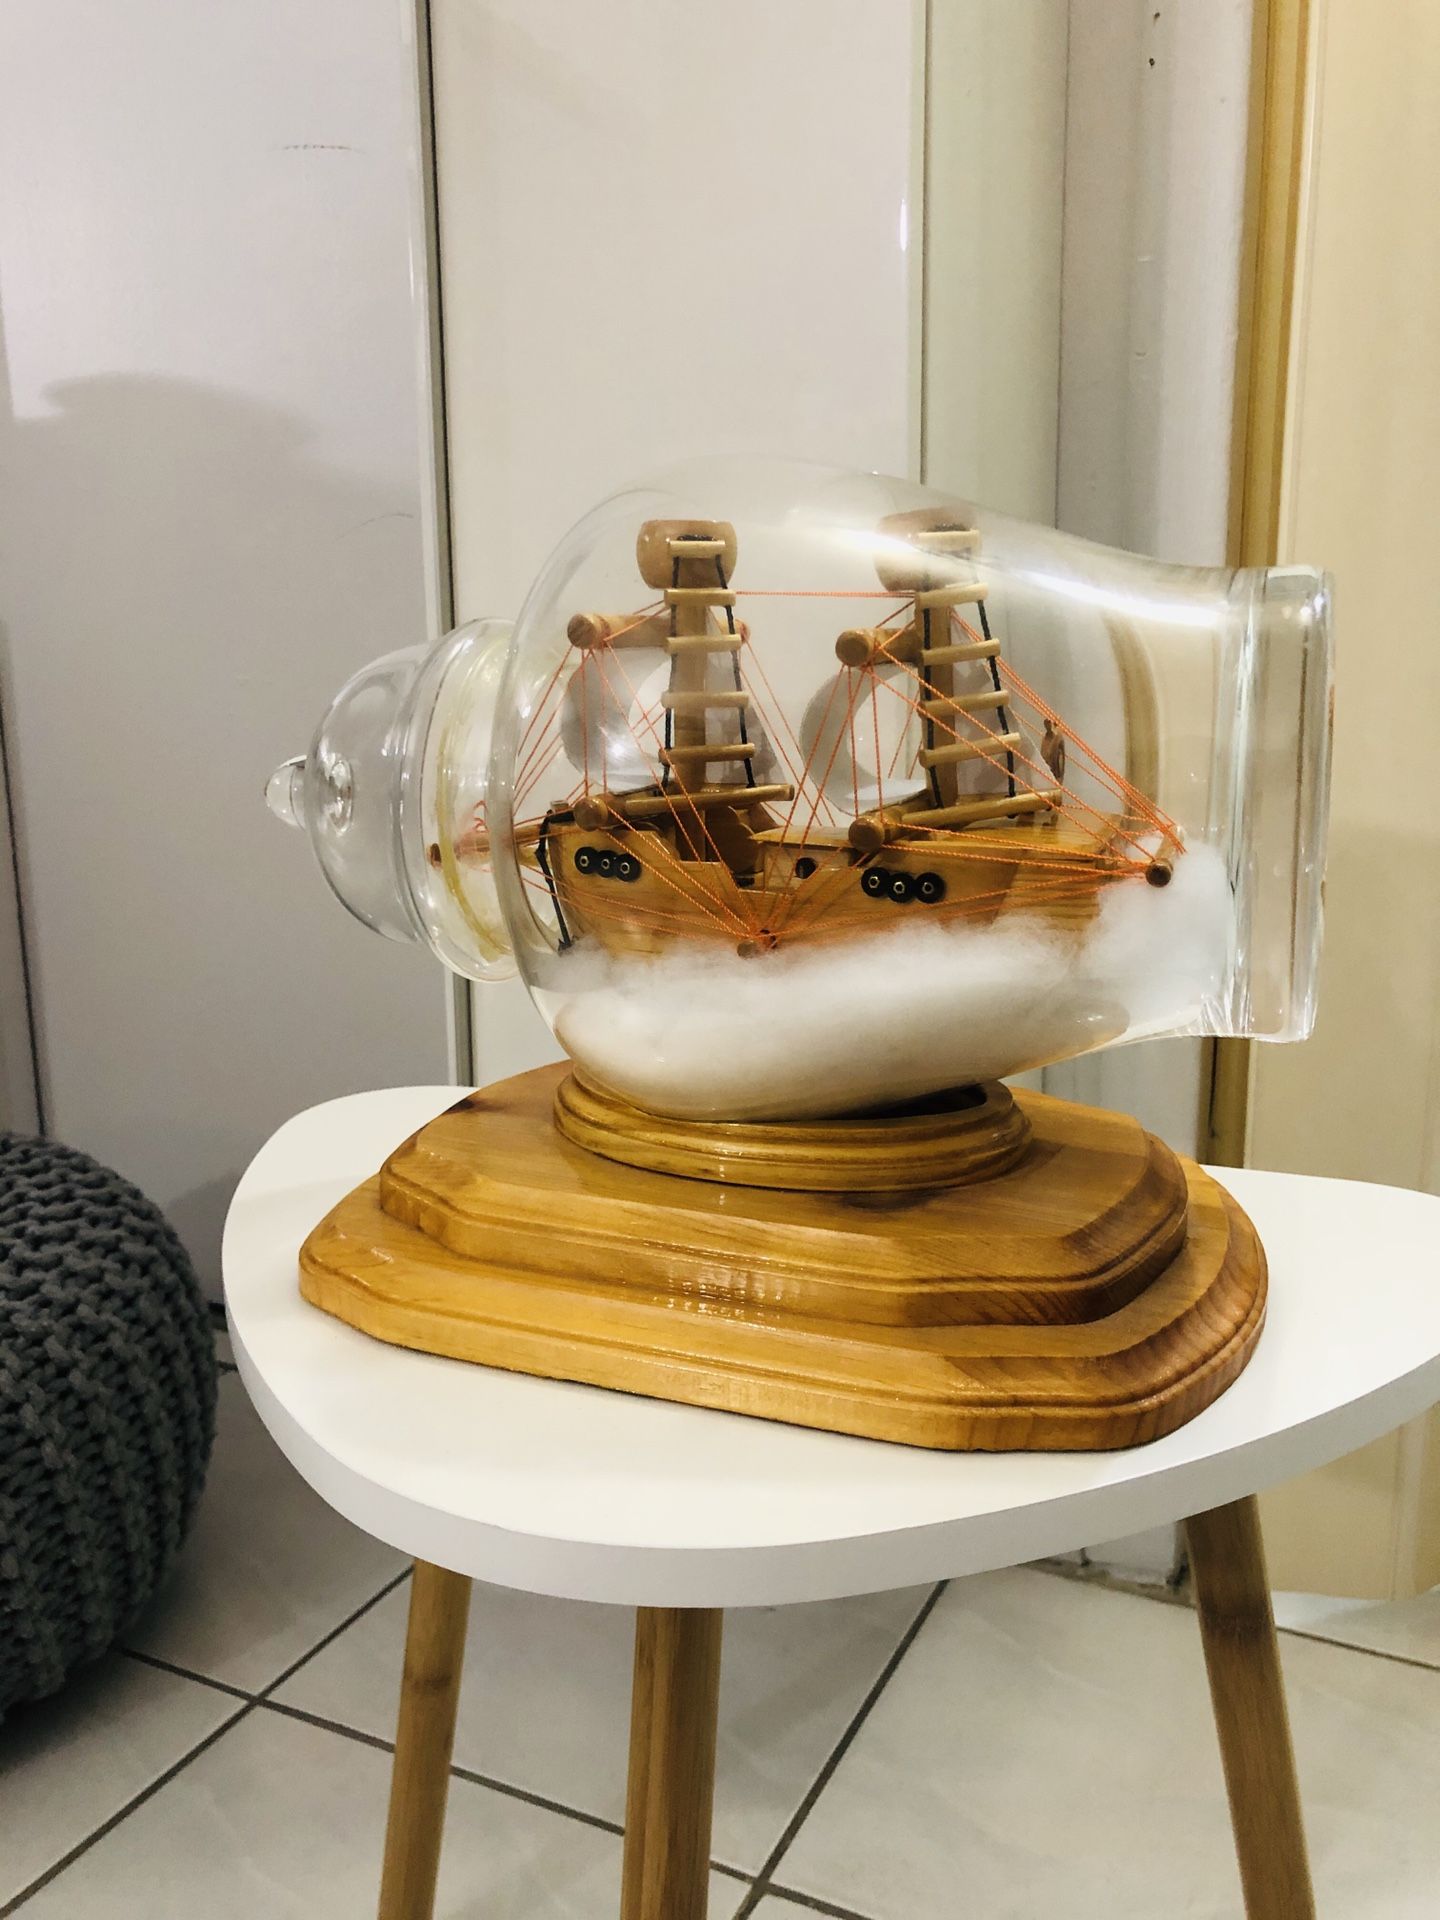 Antique ship in a bottle. Beautiful wood centerpiece